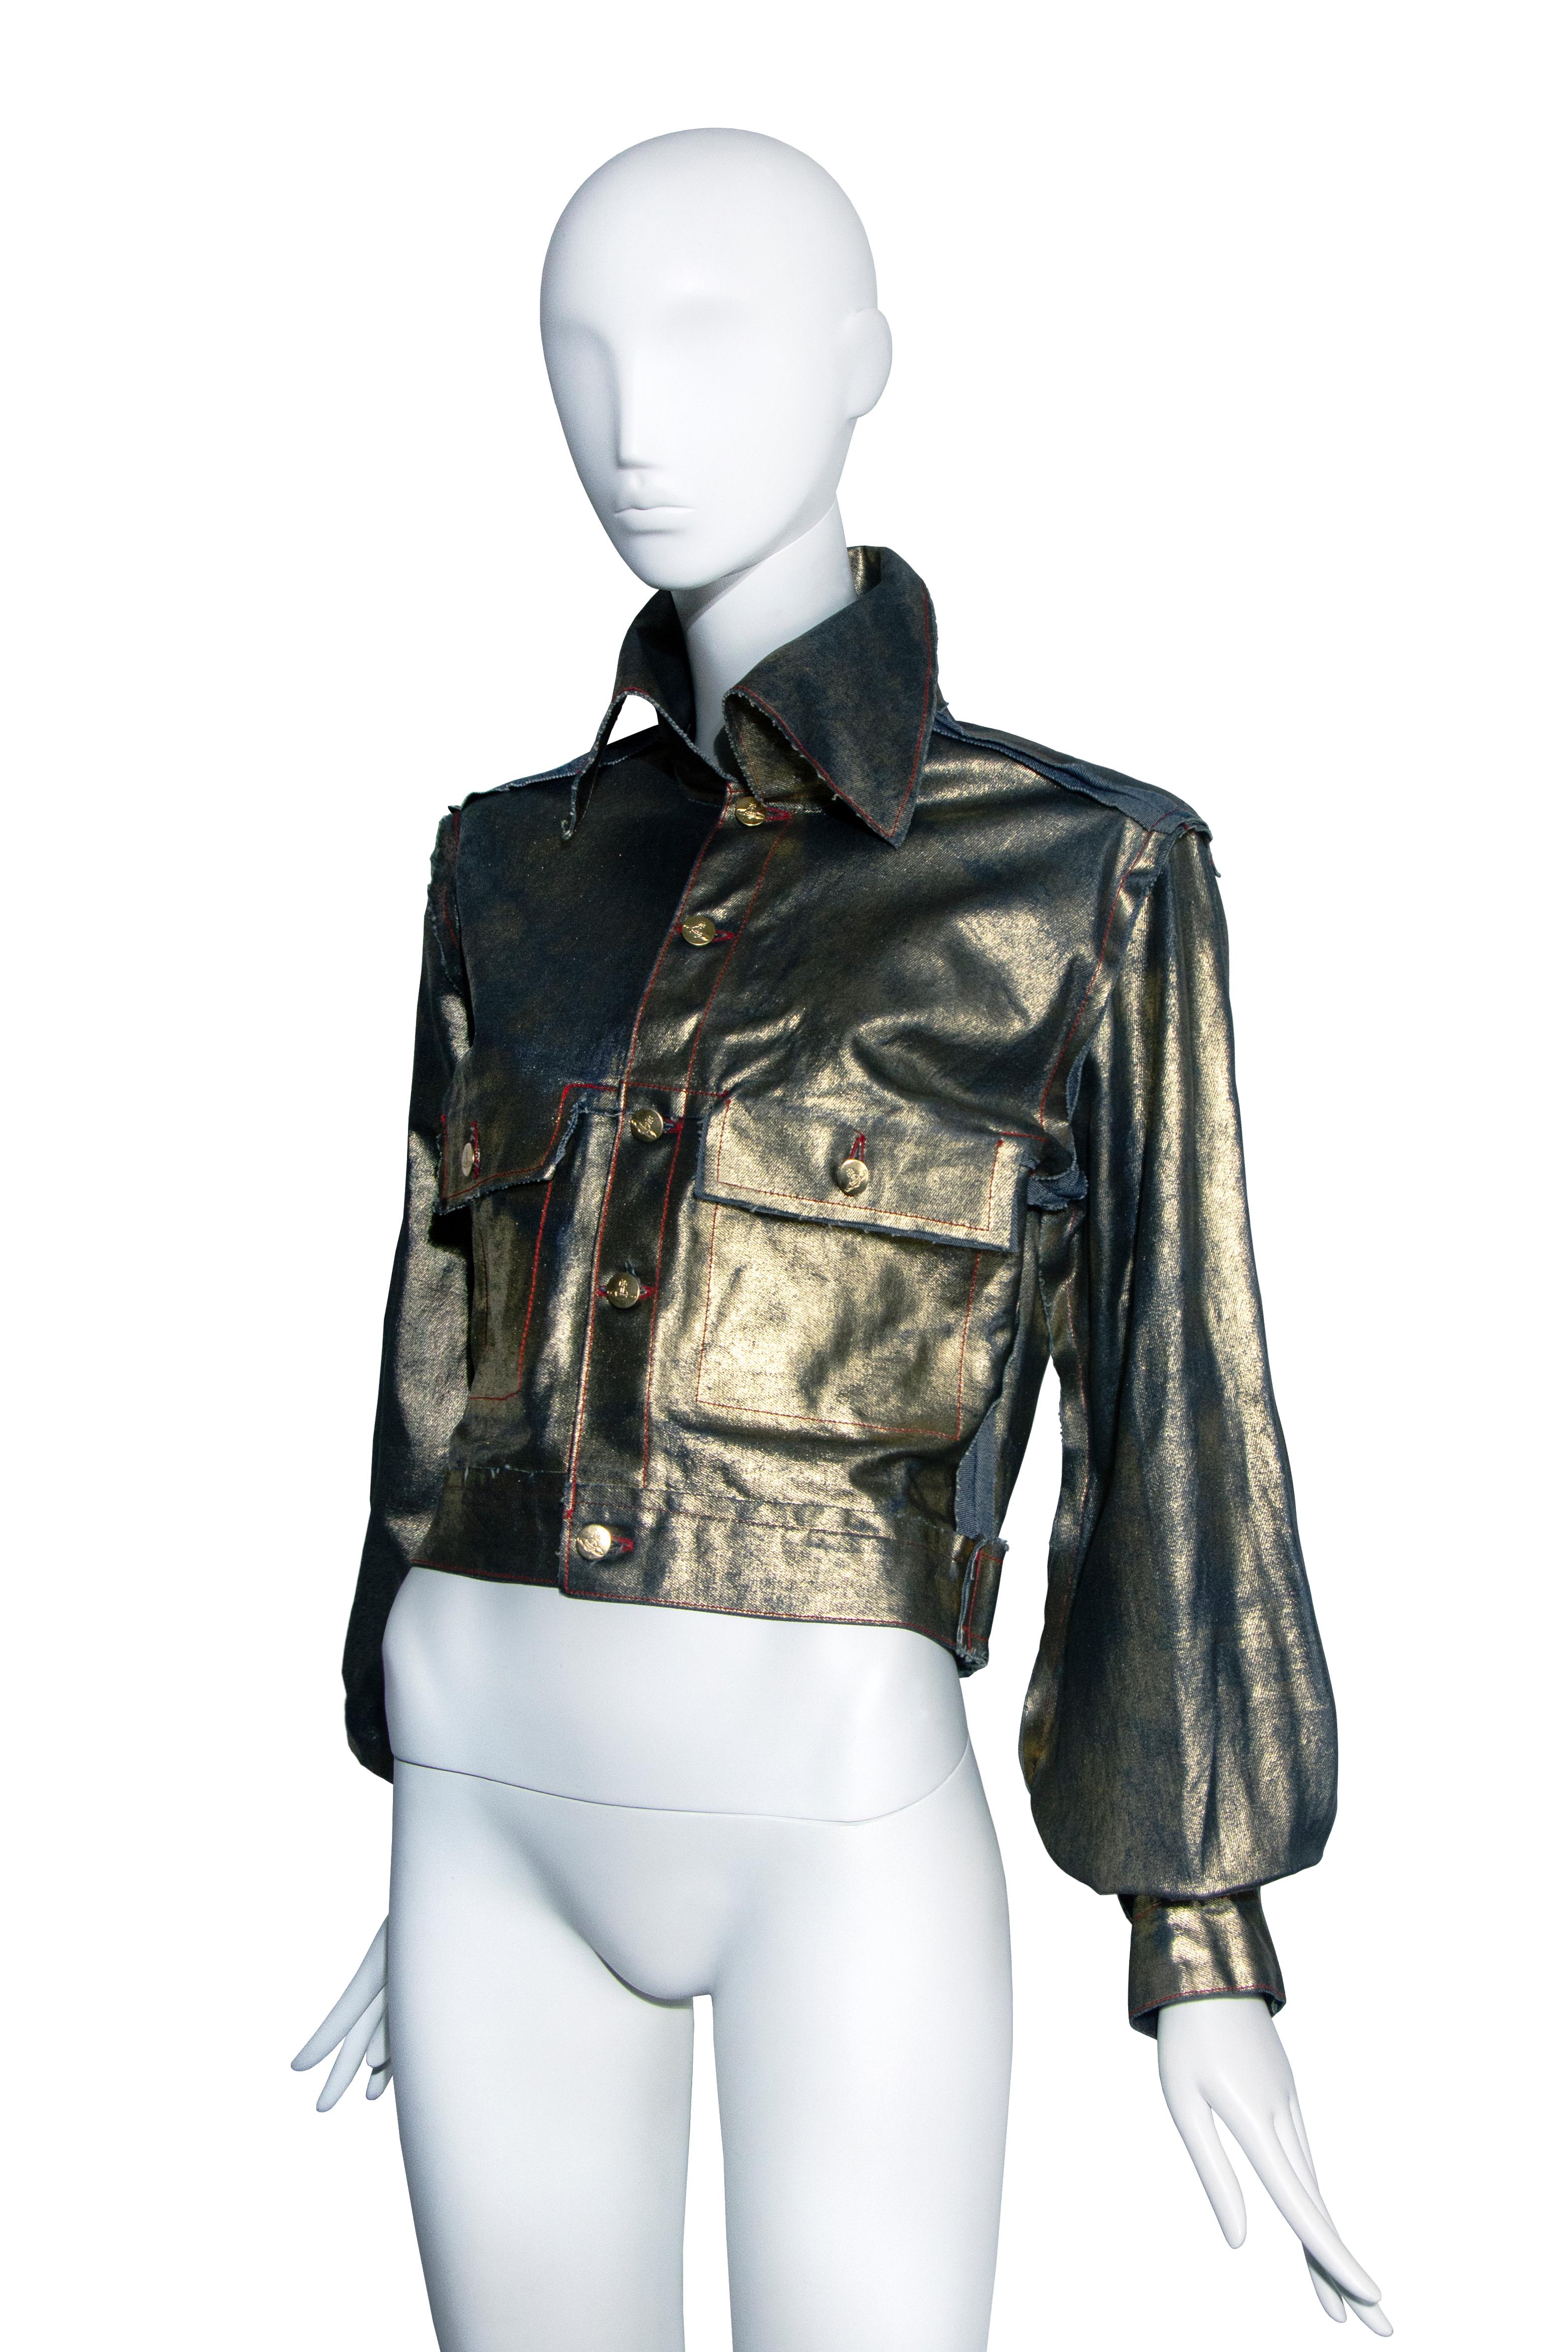  Vivienne Westwood 'Grand Hotel' metallic gold painted denim jacket, ss 1993 For Sale 1